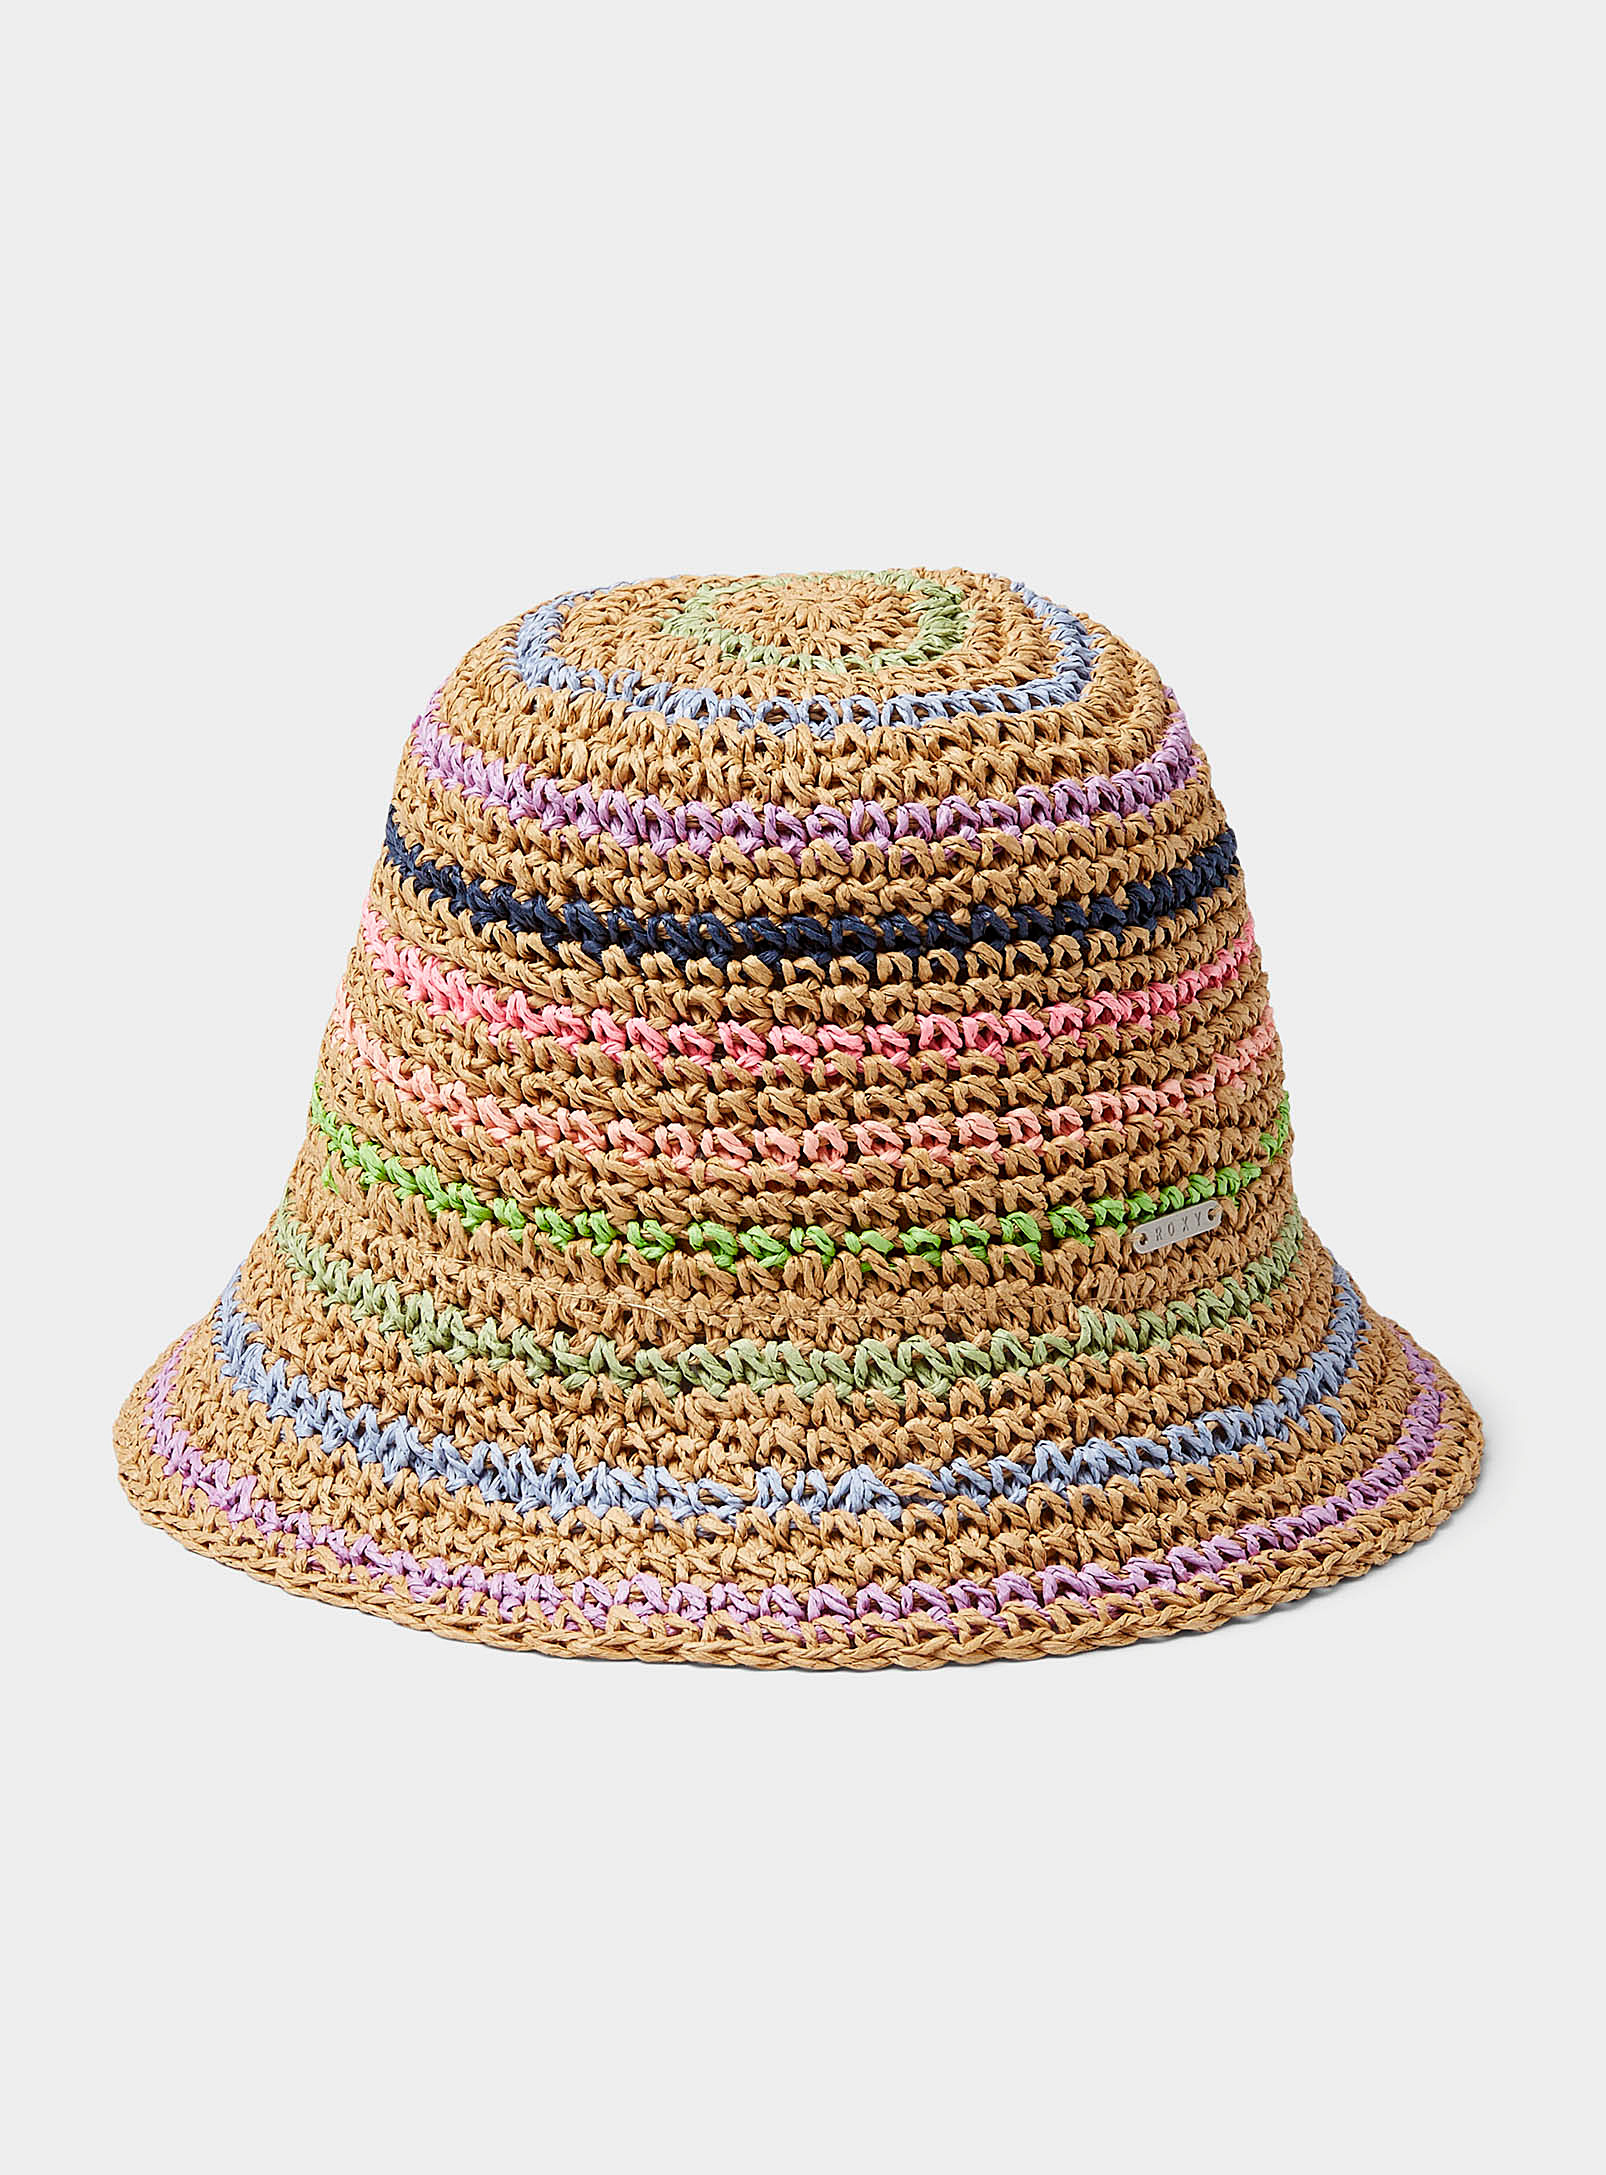 Roxy - Women's Colourful stripe braided straw Cloche Hat